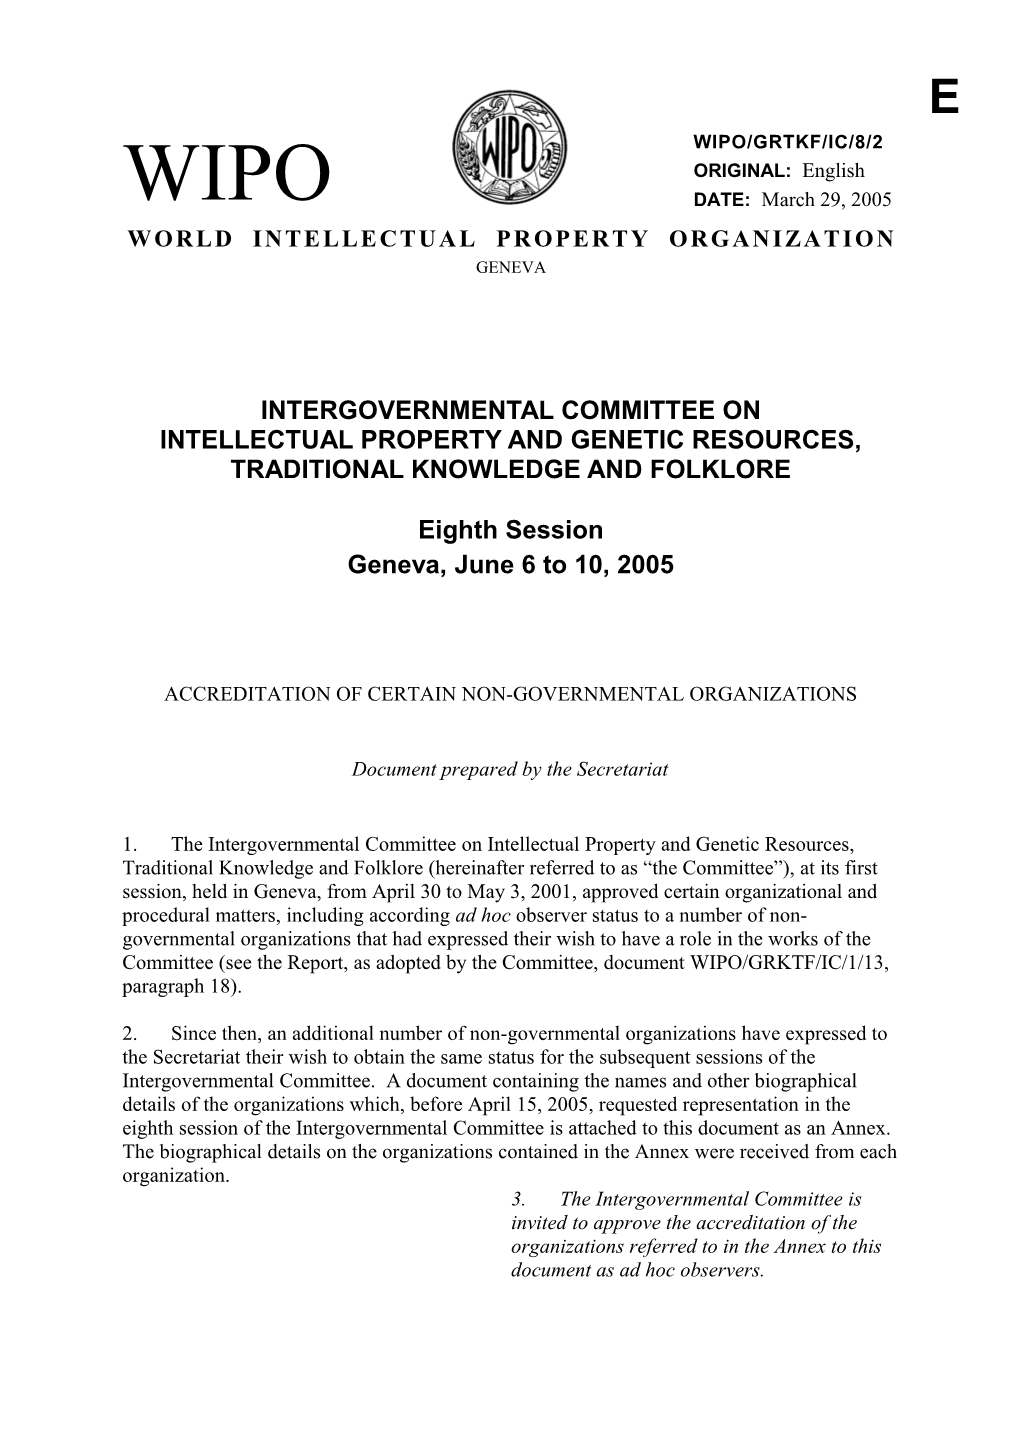 WIPO/GRTKF/IC/8/2: Accreditation of Certain Non-Governmental Organizations